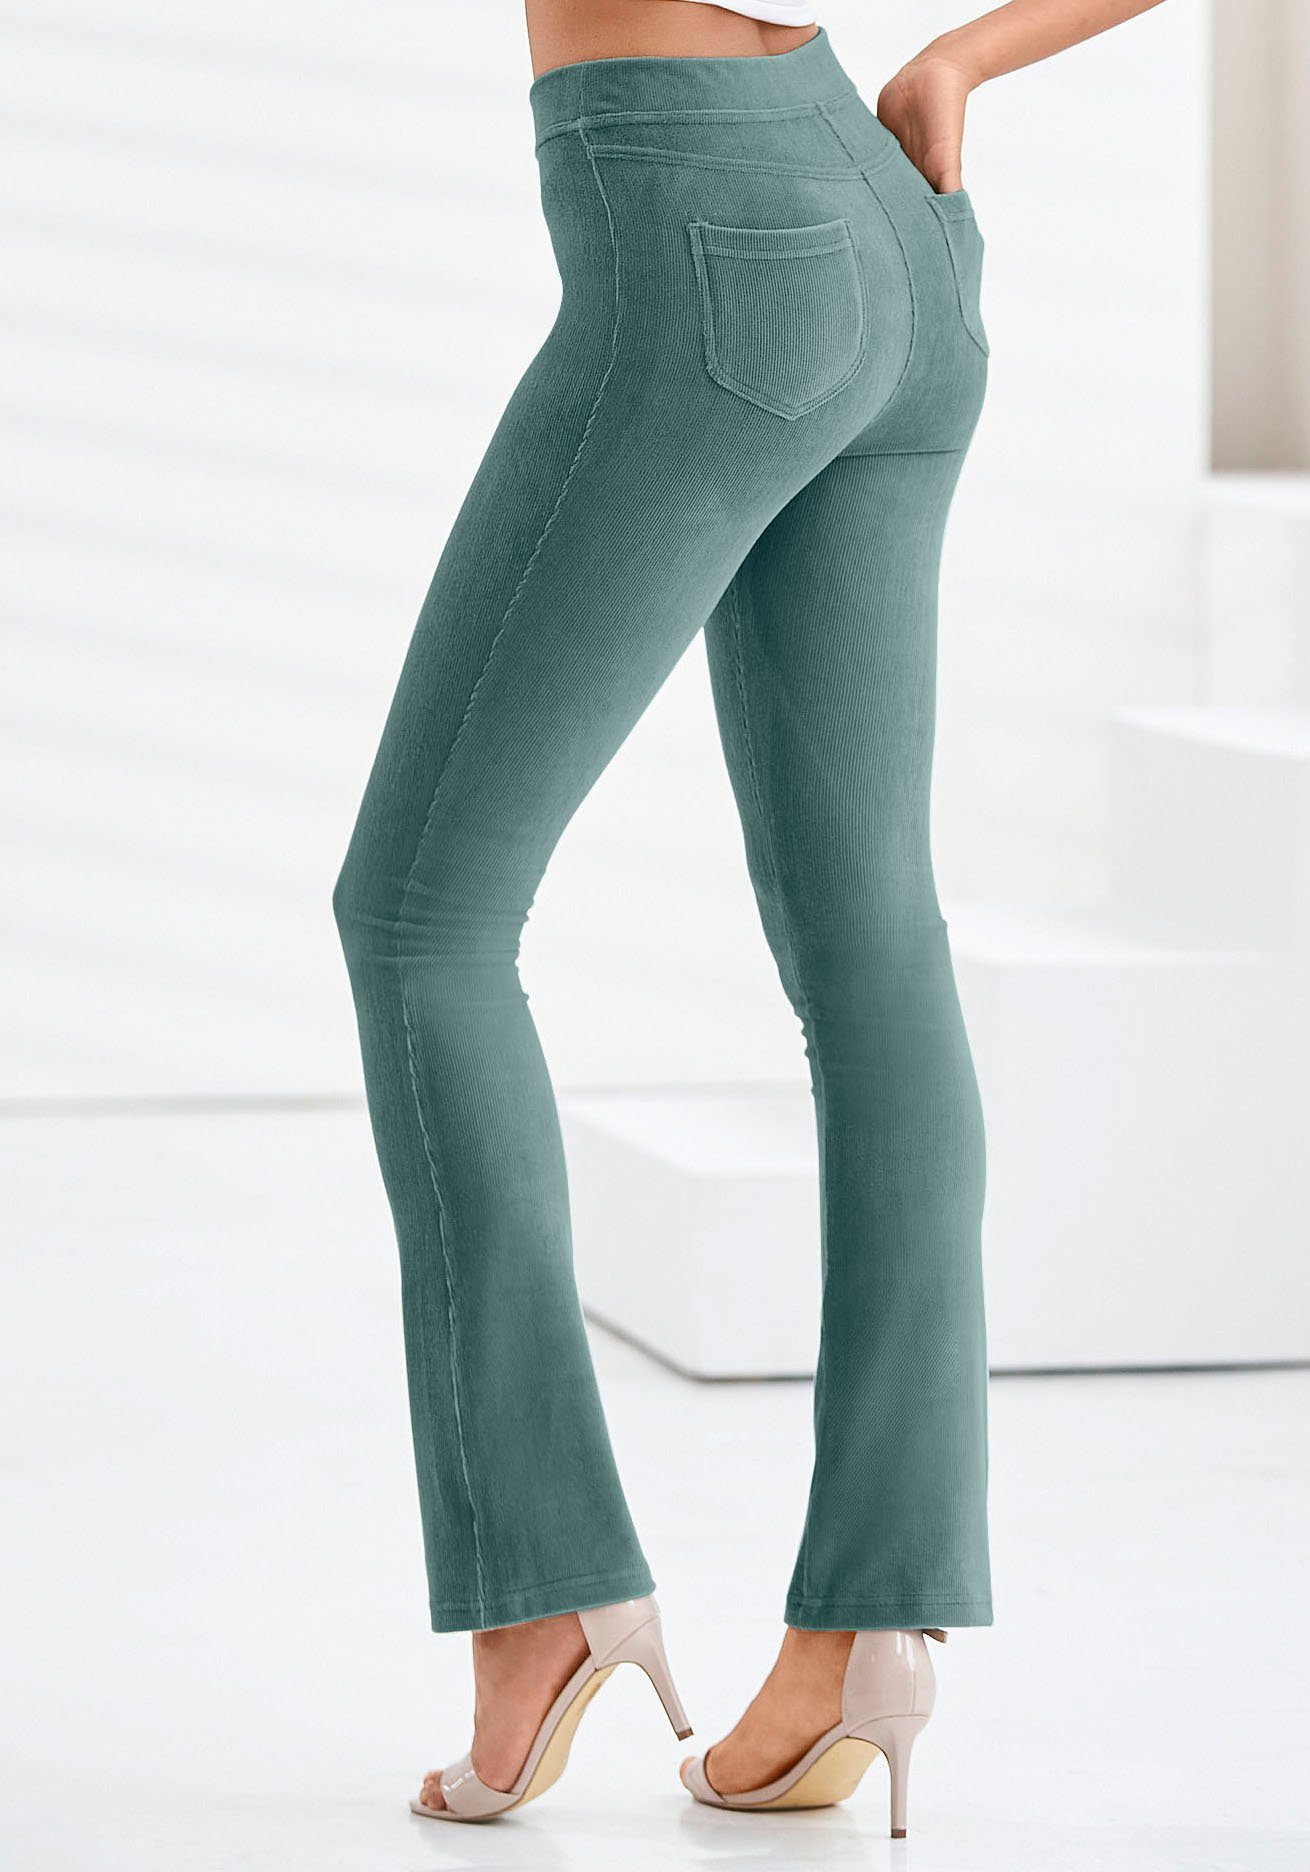 LASCANA Jazzpants aus weichem Material in Cord-Optik, Loungewear petrol